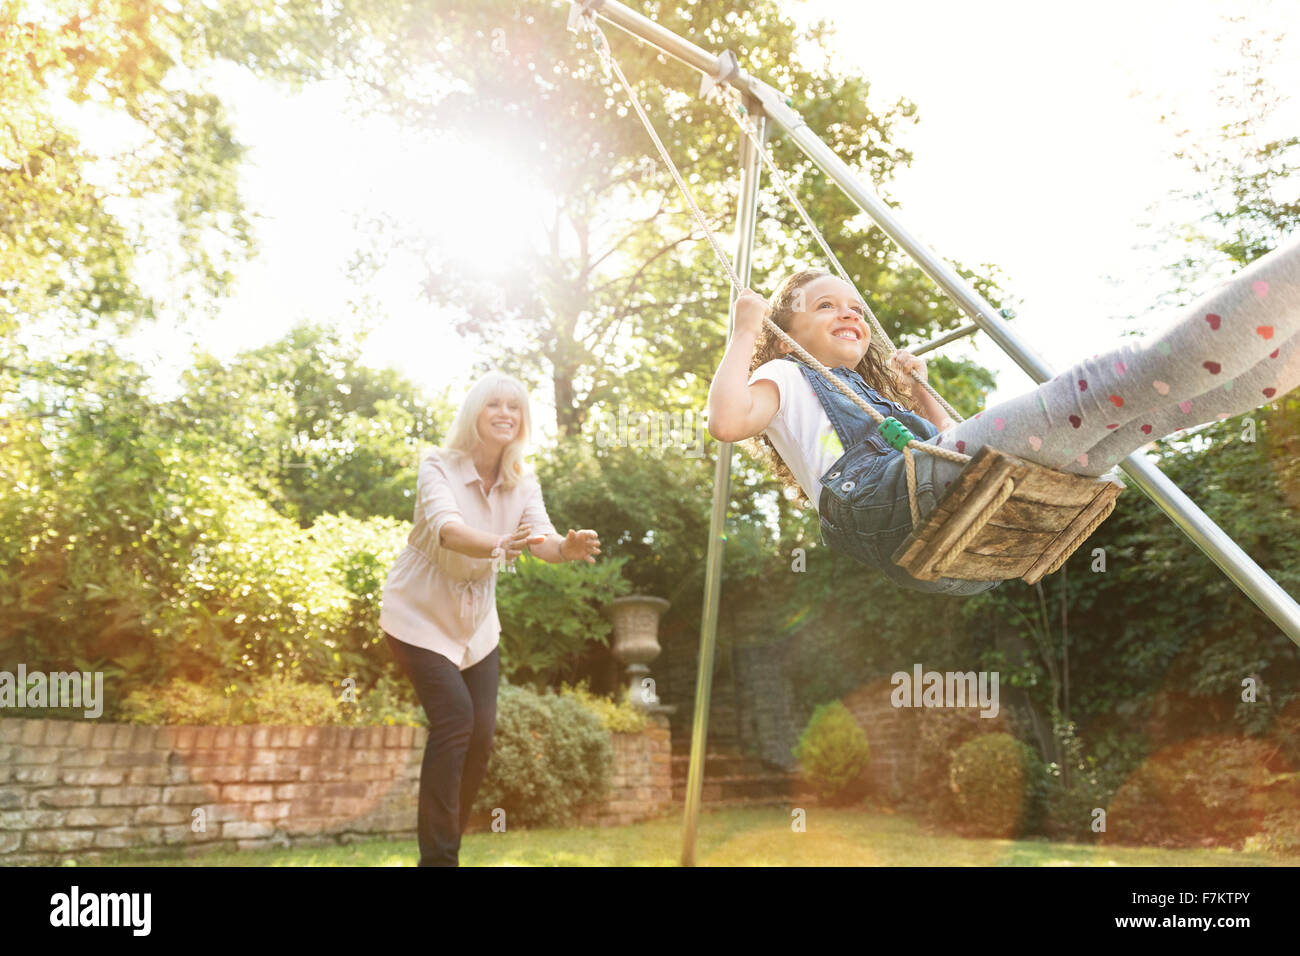 Grandmother pushing granddaughter on swing in backyard Stock Photo